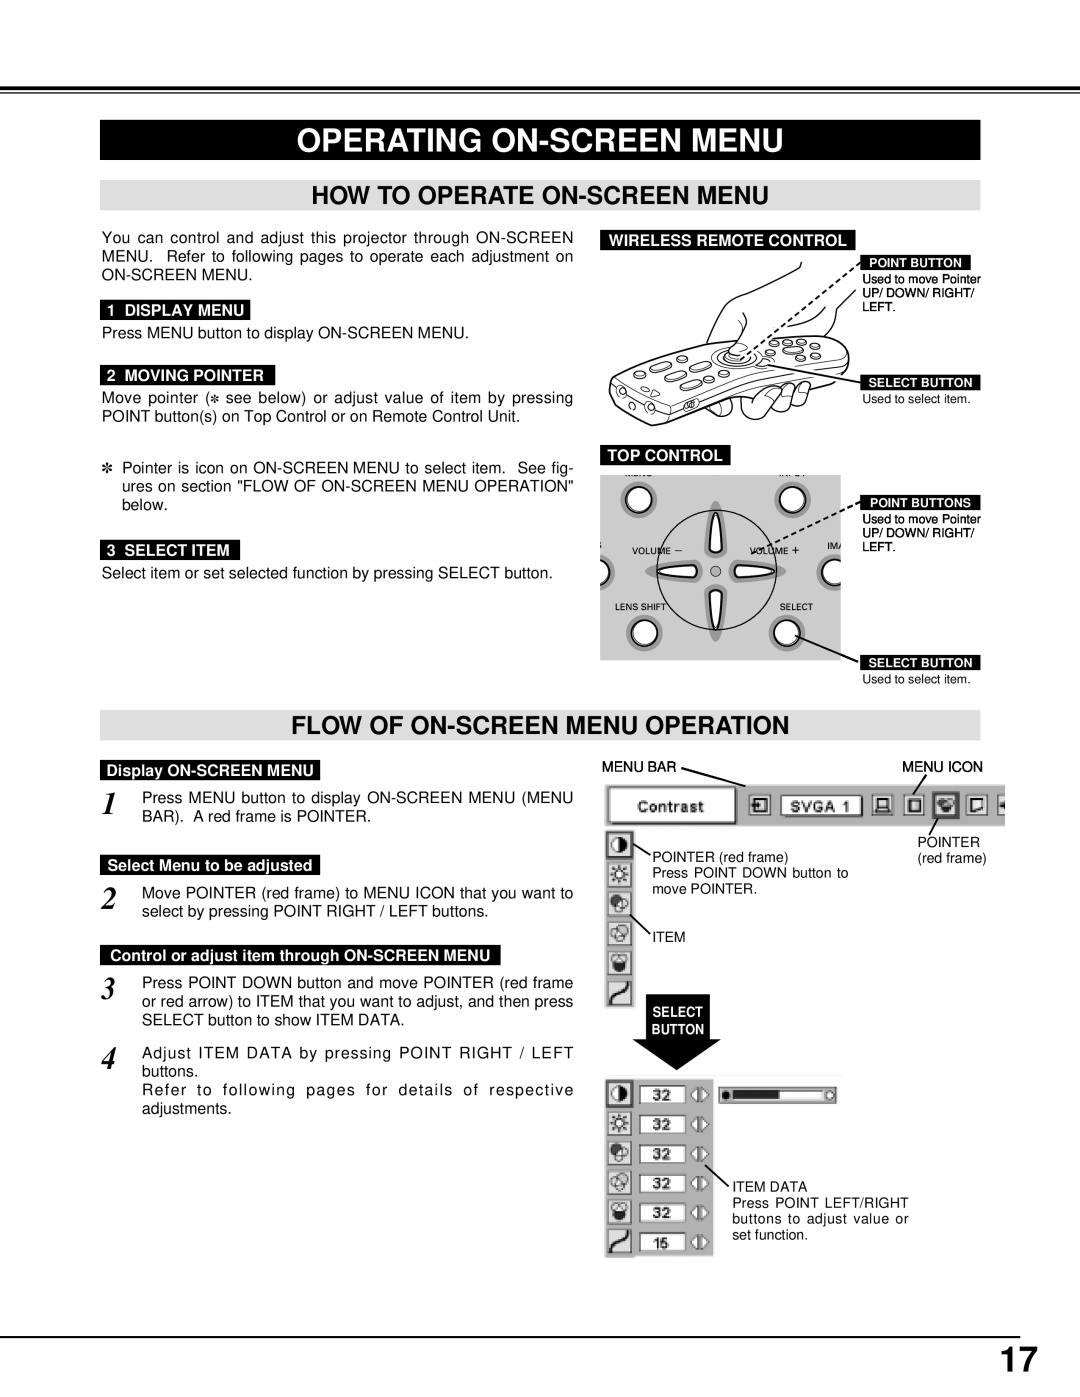 Eiki LC-X1000 instruction manual Operating On-Screenmenu, How To Operate On-Screenmenu, Flow Of On-Screenmenu Operation 